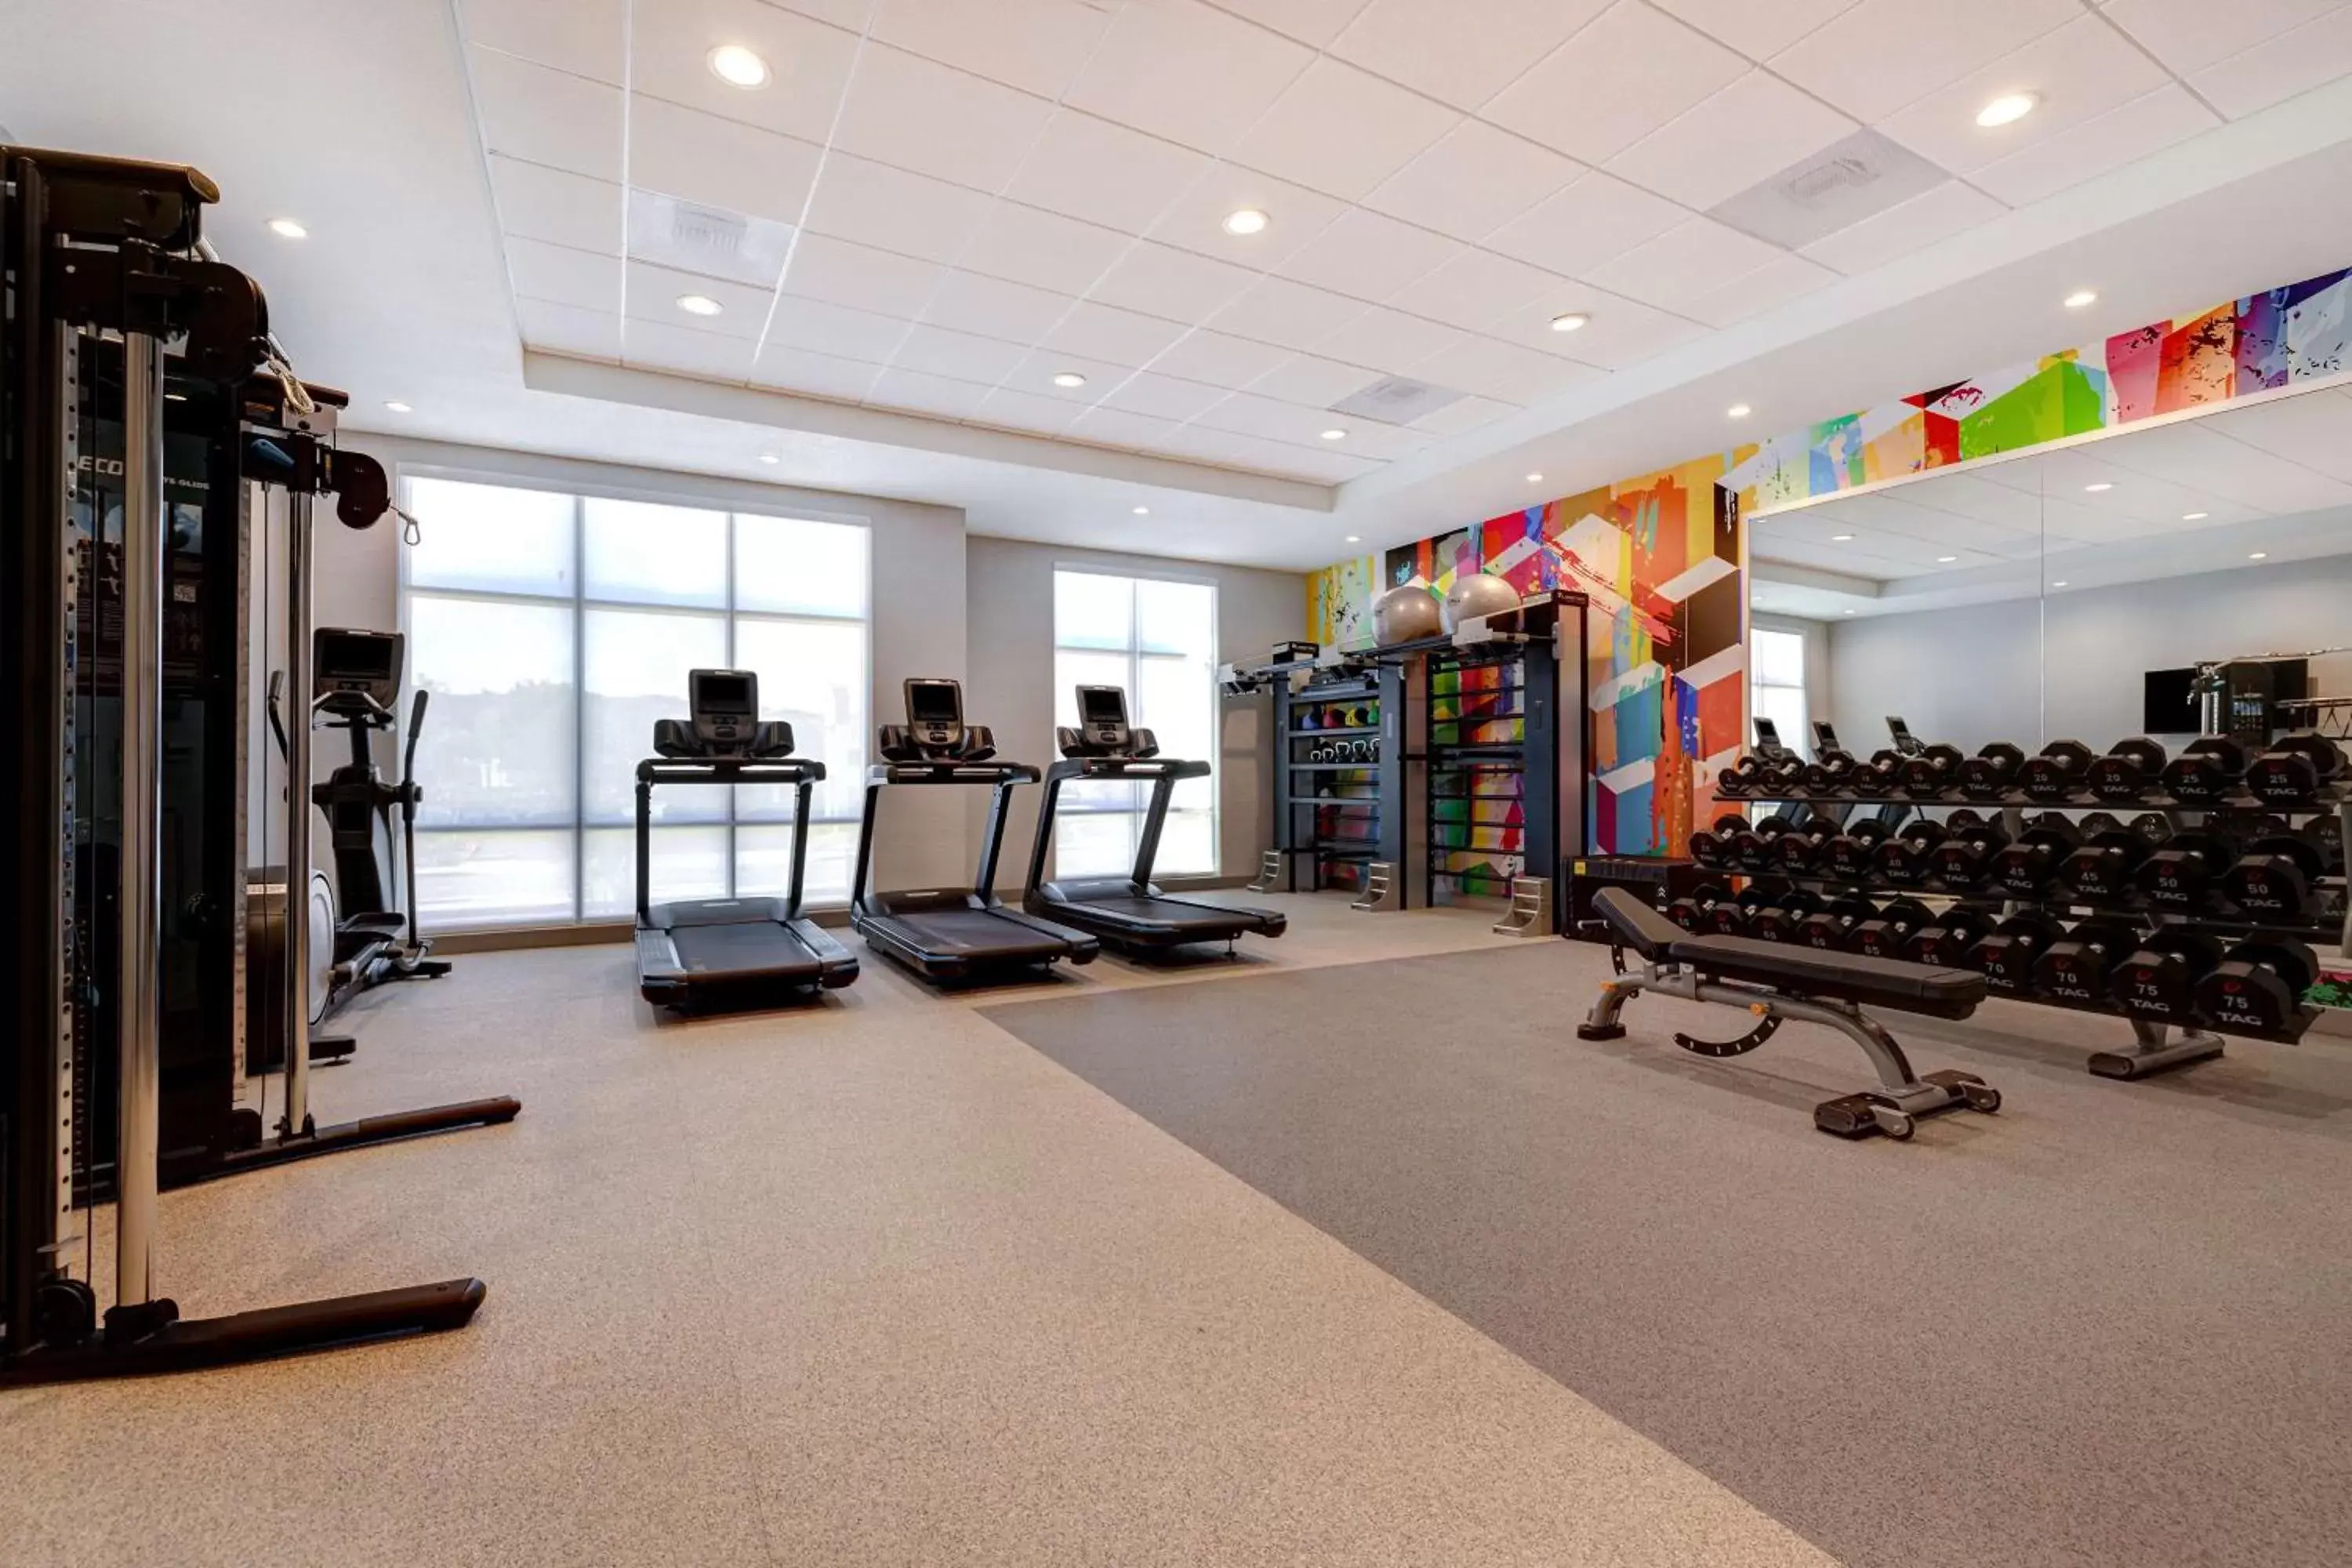 Fitness centre/facilities, Fitness Center/Facilities in Hilton Garden Inn Temecula